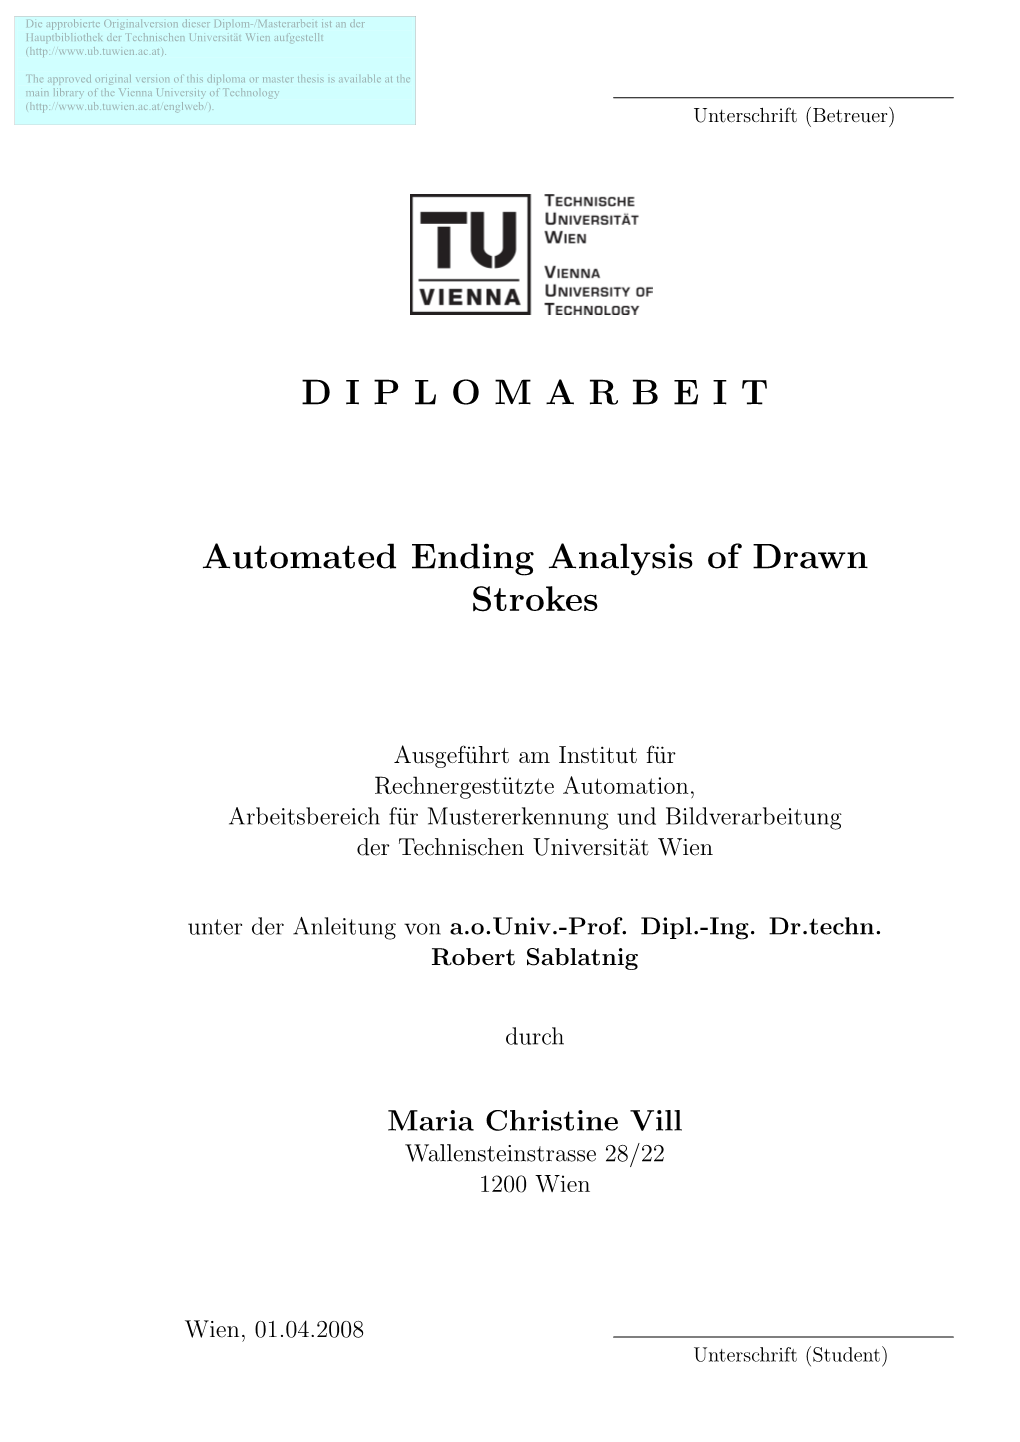 DIPLOMARBEIT Automated Ending Analysis of Drawn